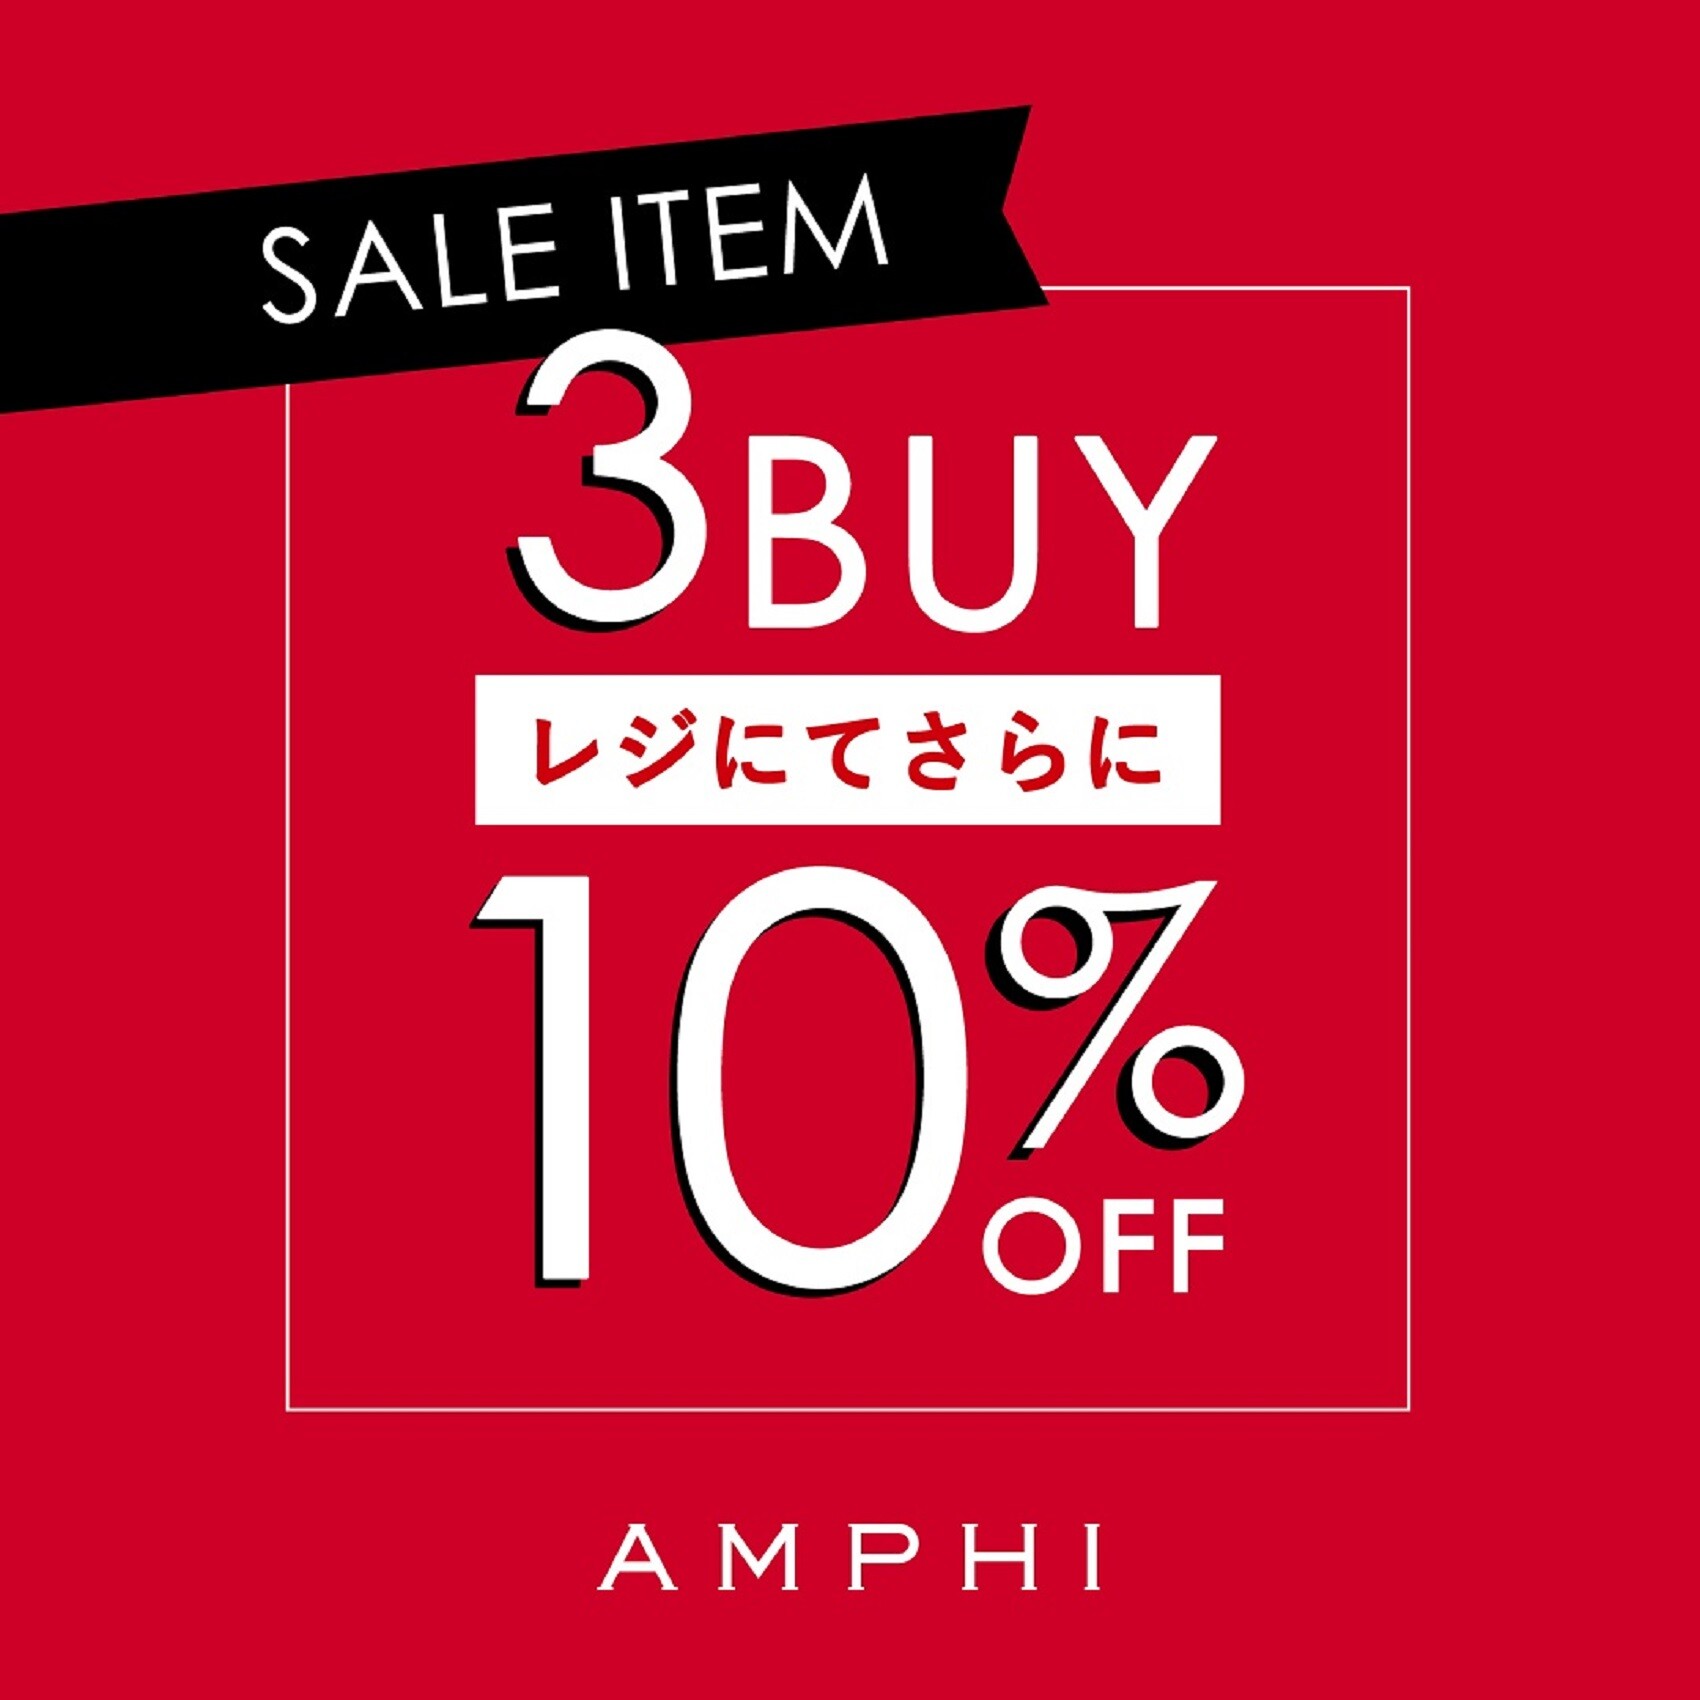 AMPHI】セール商品3BUY10%OFF開催中!! - FUJII DAIMARU